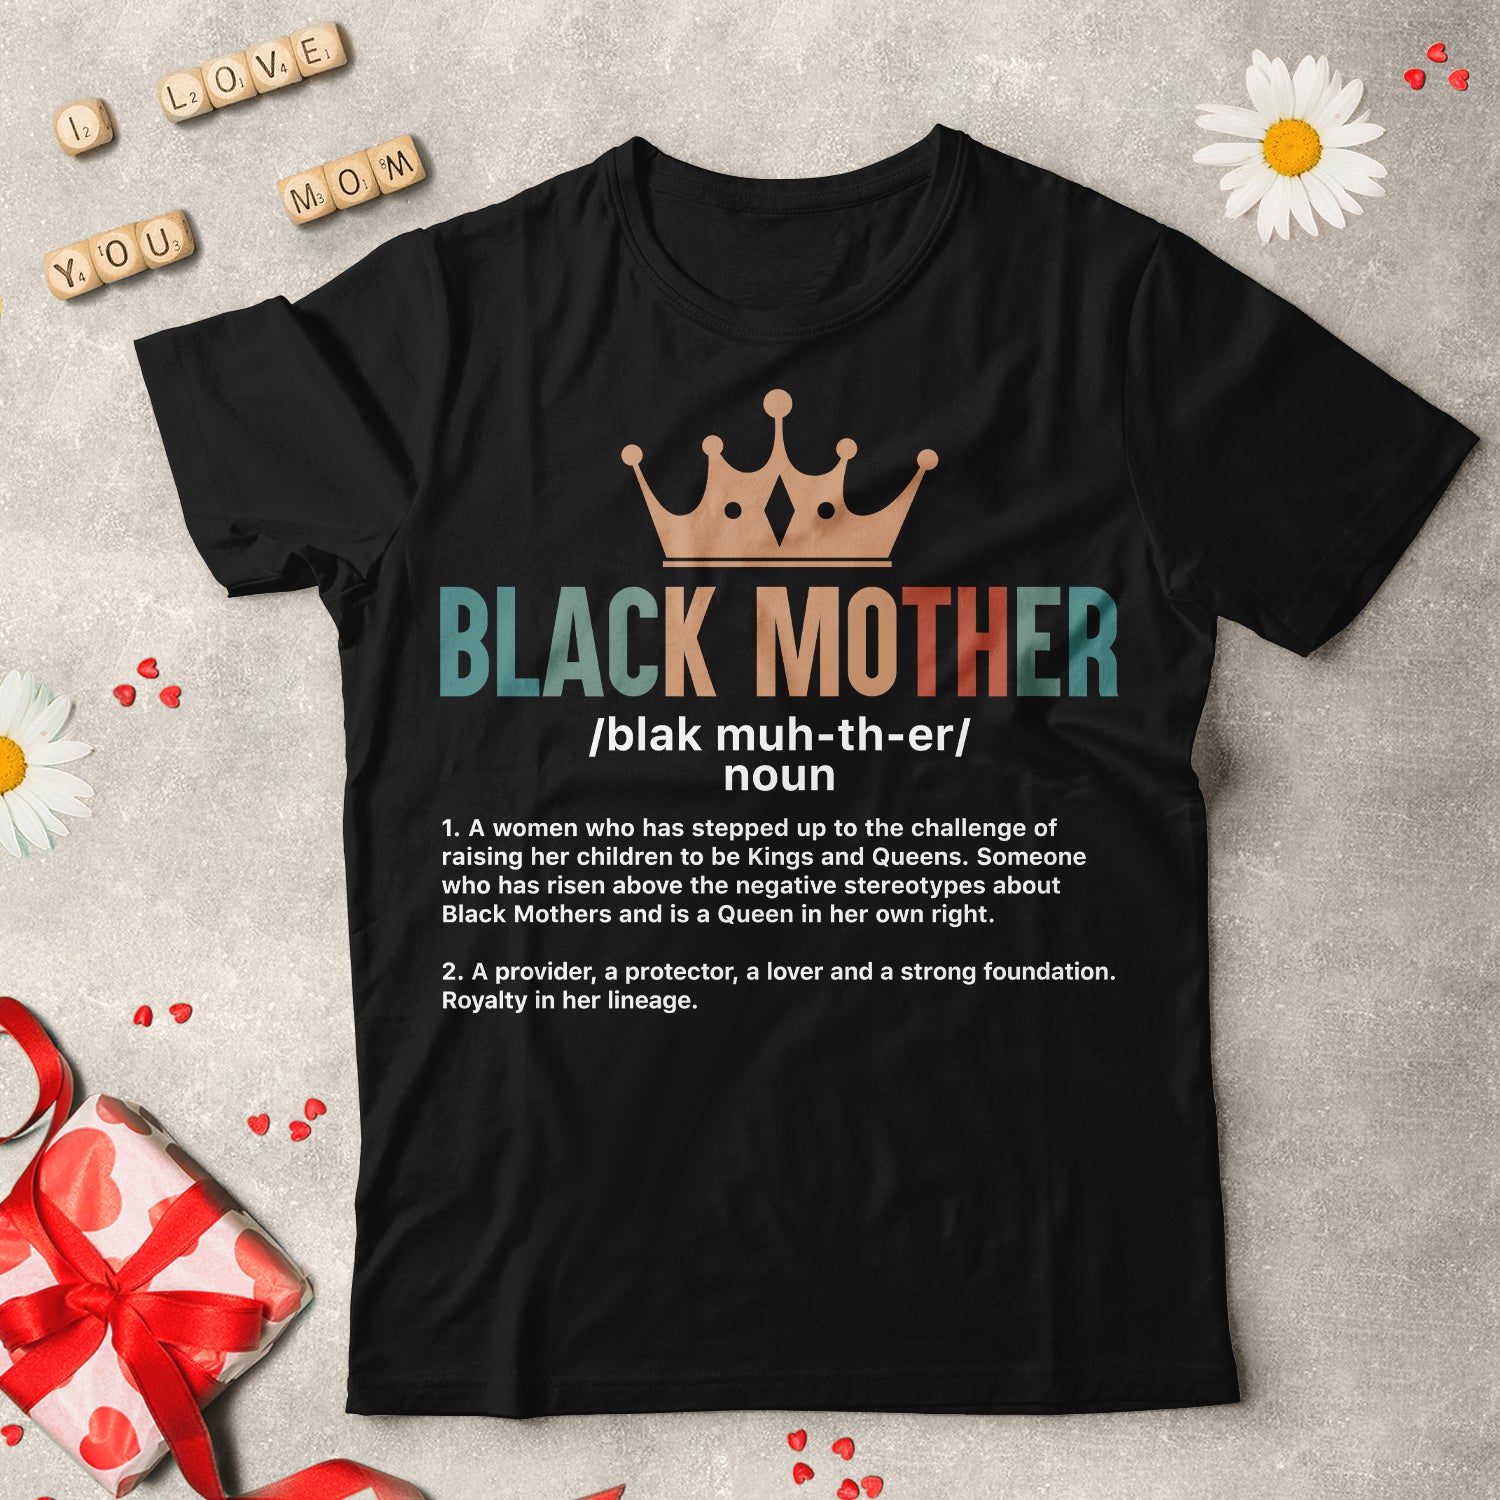 Black Mother T-shirt Apparel Gearment 